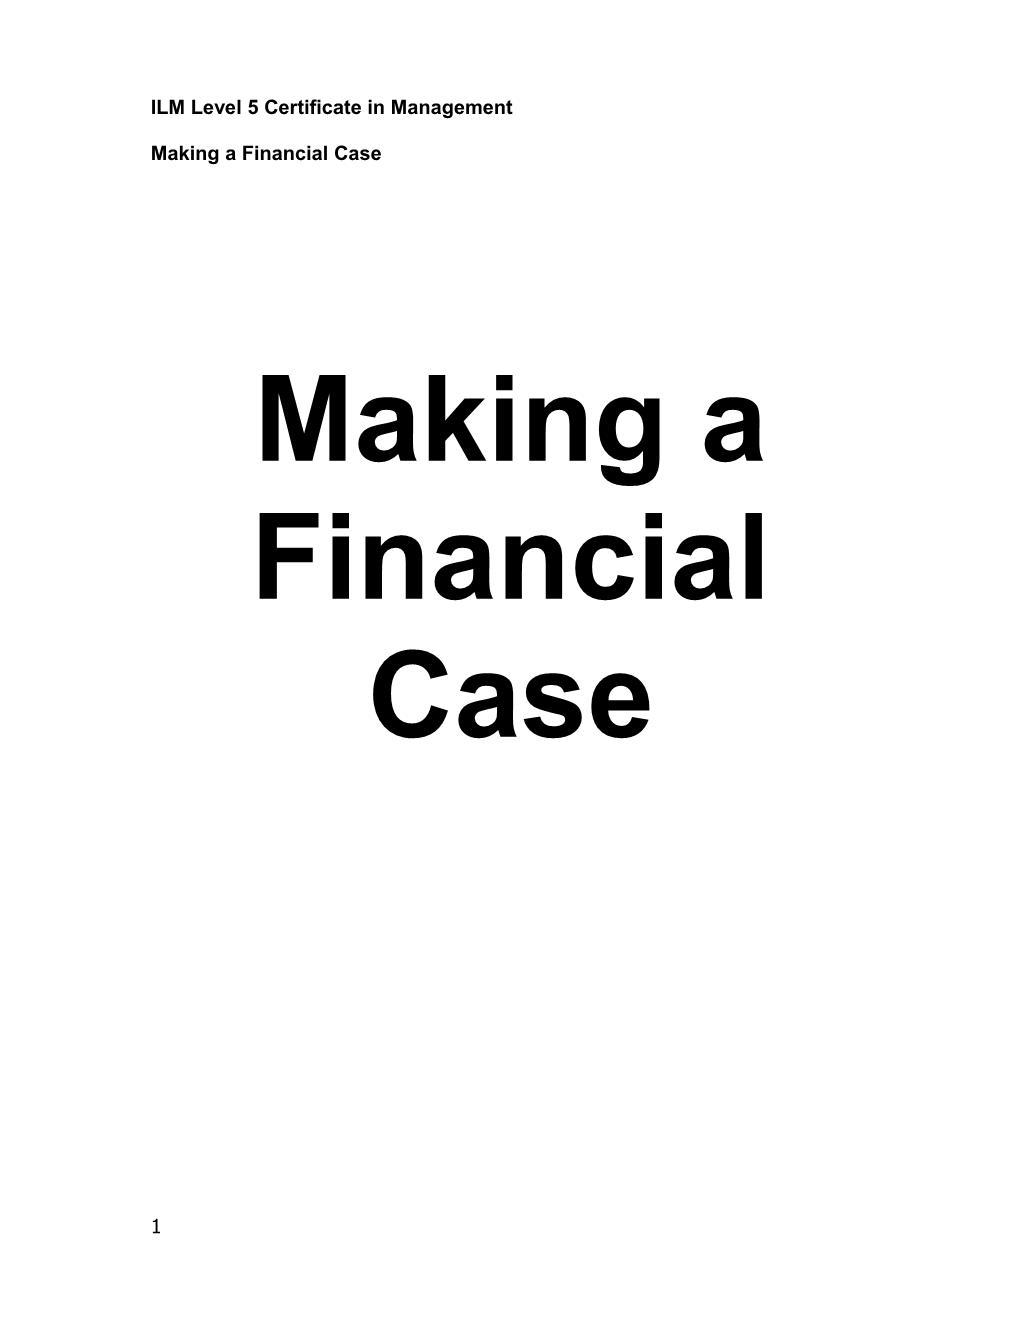 Making a Financial Case